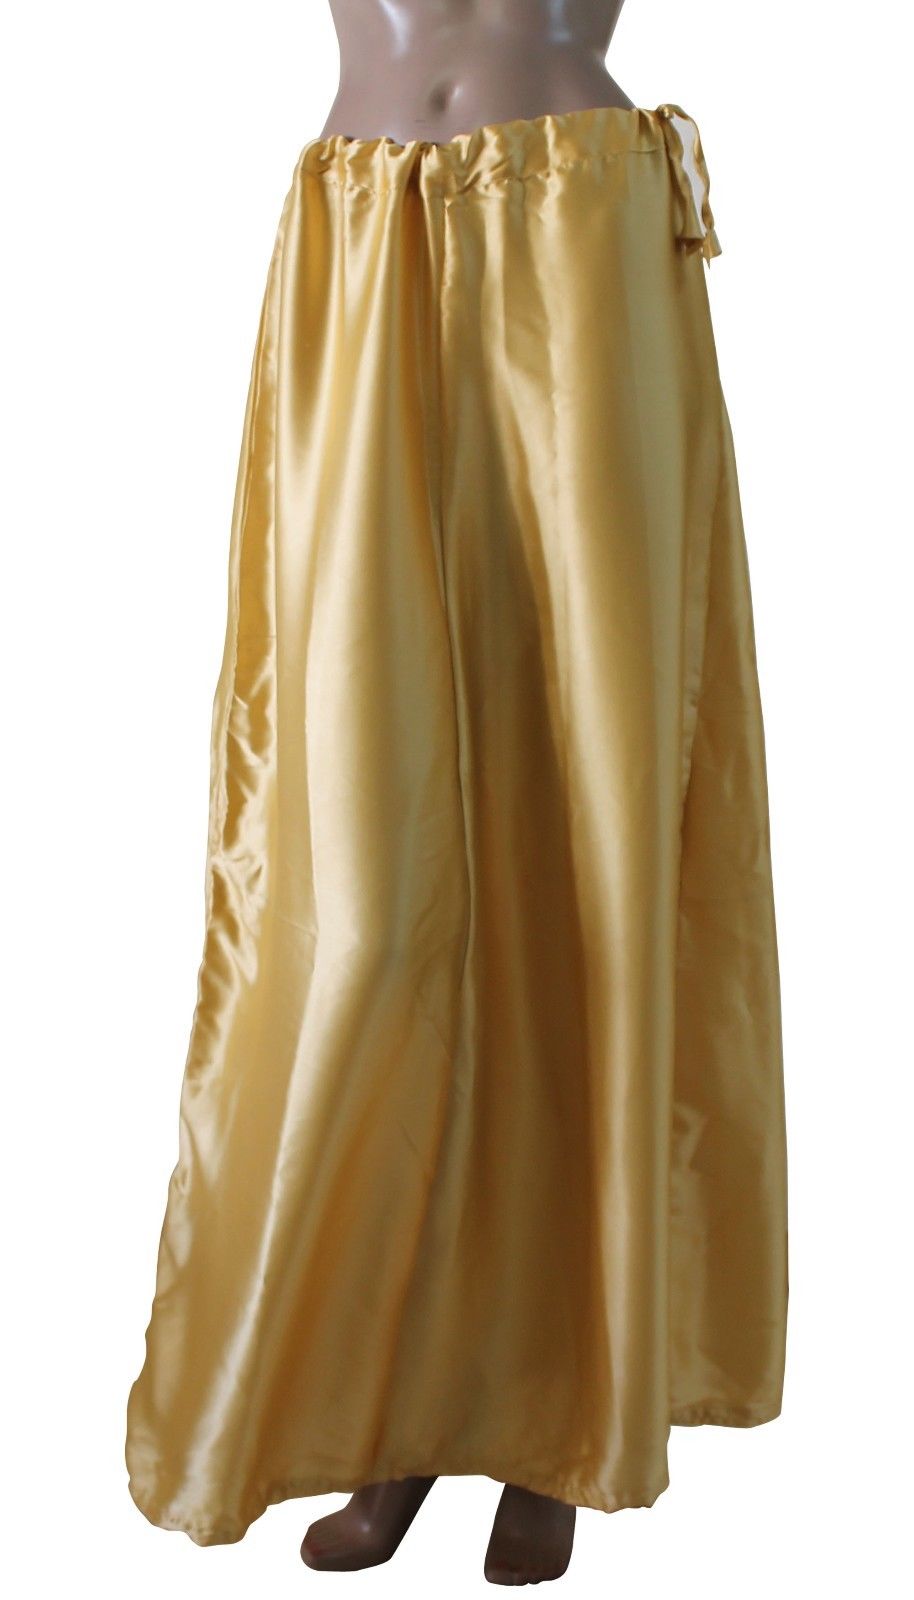 Gold soft satin skirt sari  saree Petticoat Underskirt Plus sizes up to 5XL